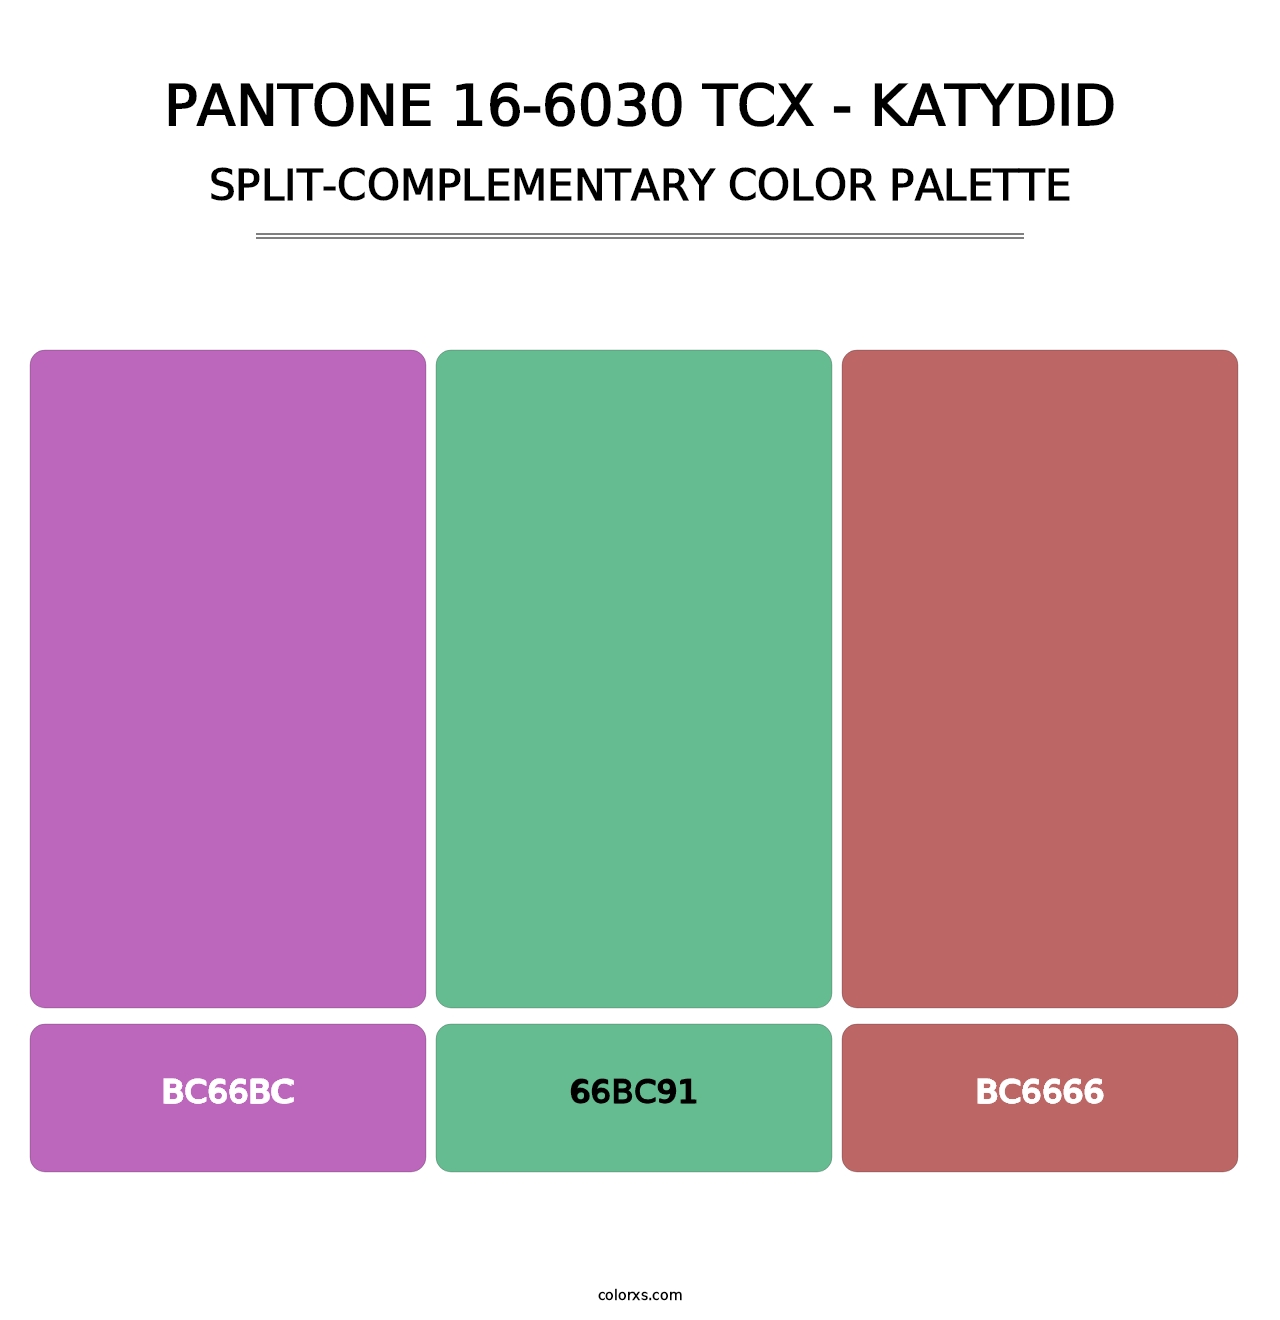 PANTONE 16-6030 TCX - Katydid - Split-Complementary Color Palette